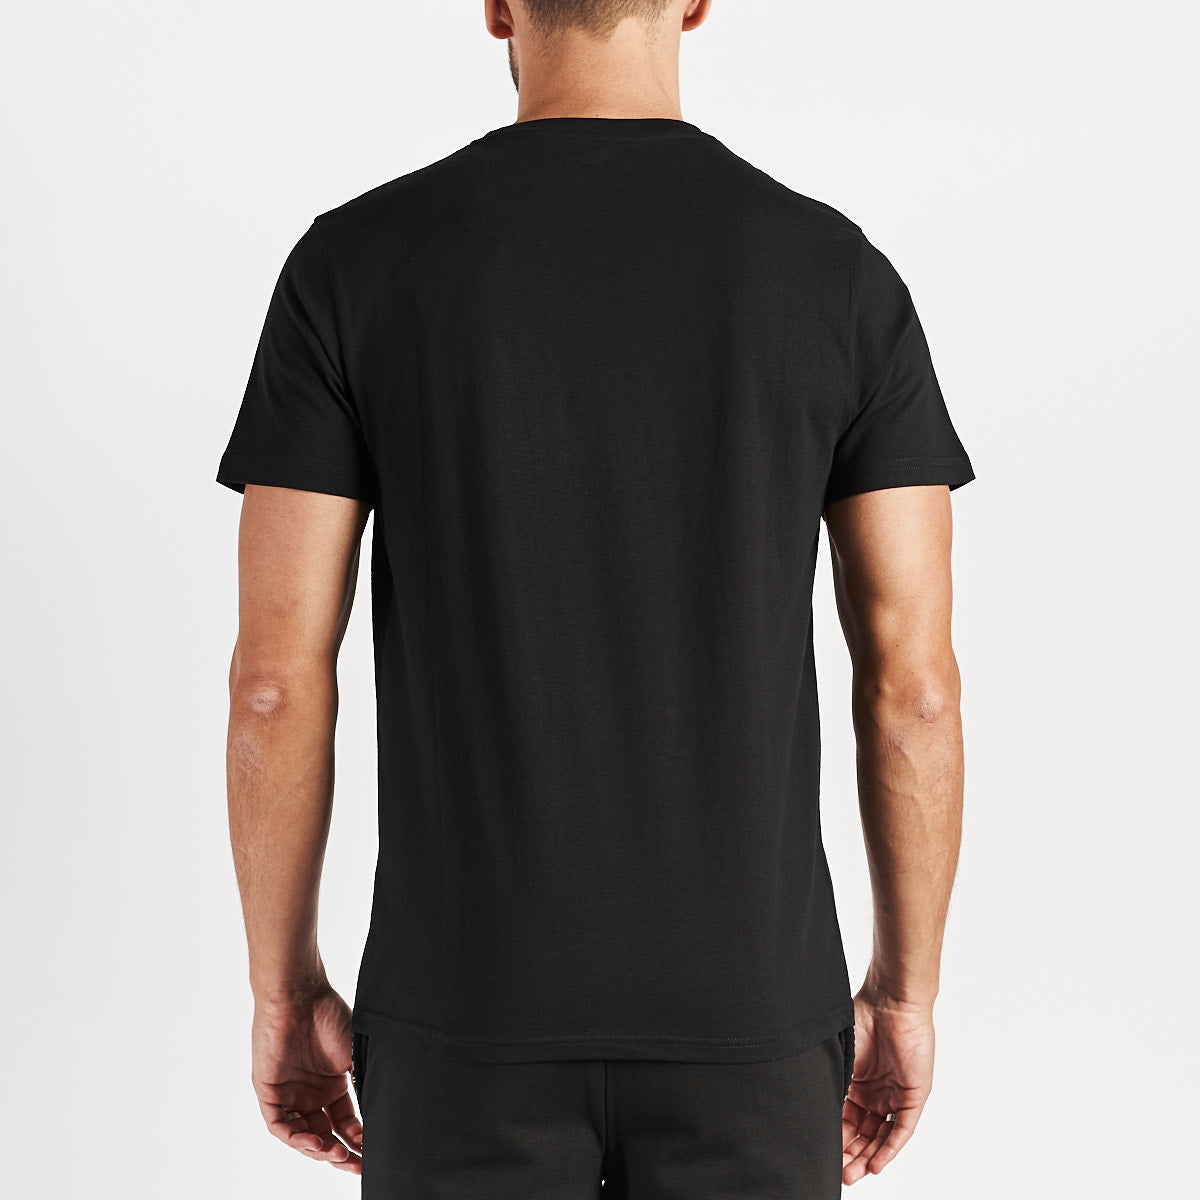 T-shirt Godot Noir Homme - Image 3